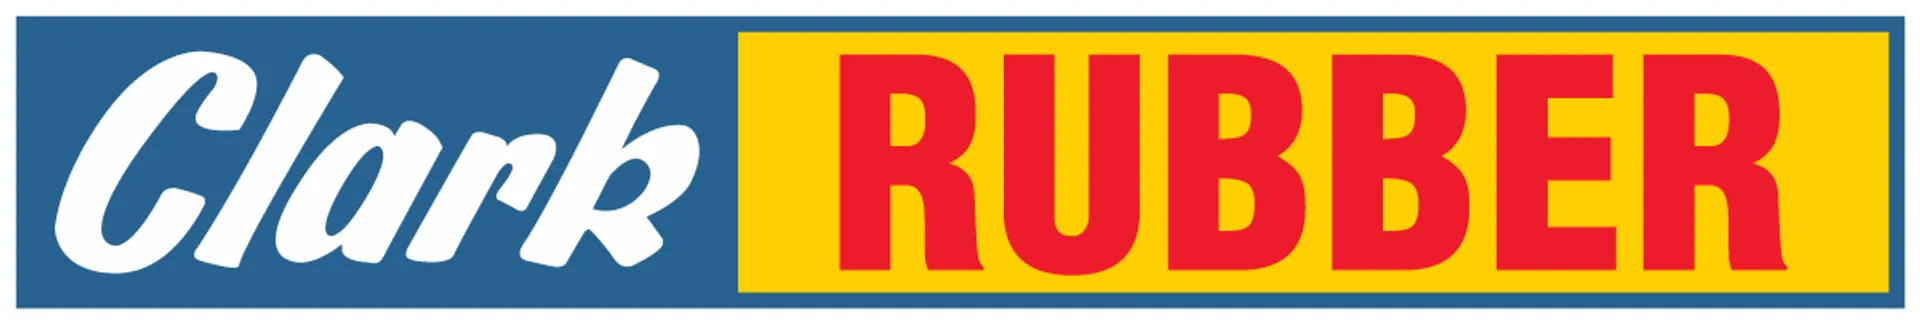 CLARK RUBBER logo of current catalogue